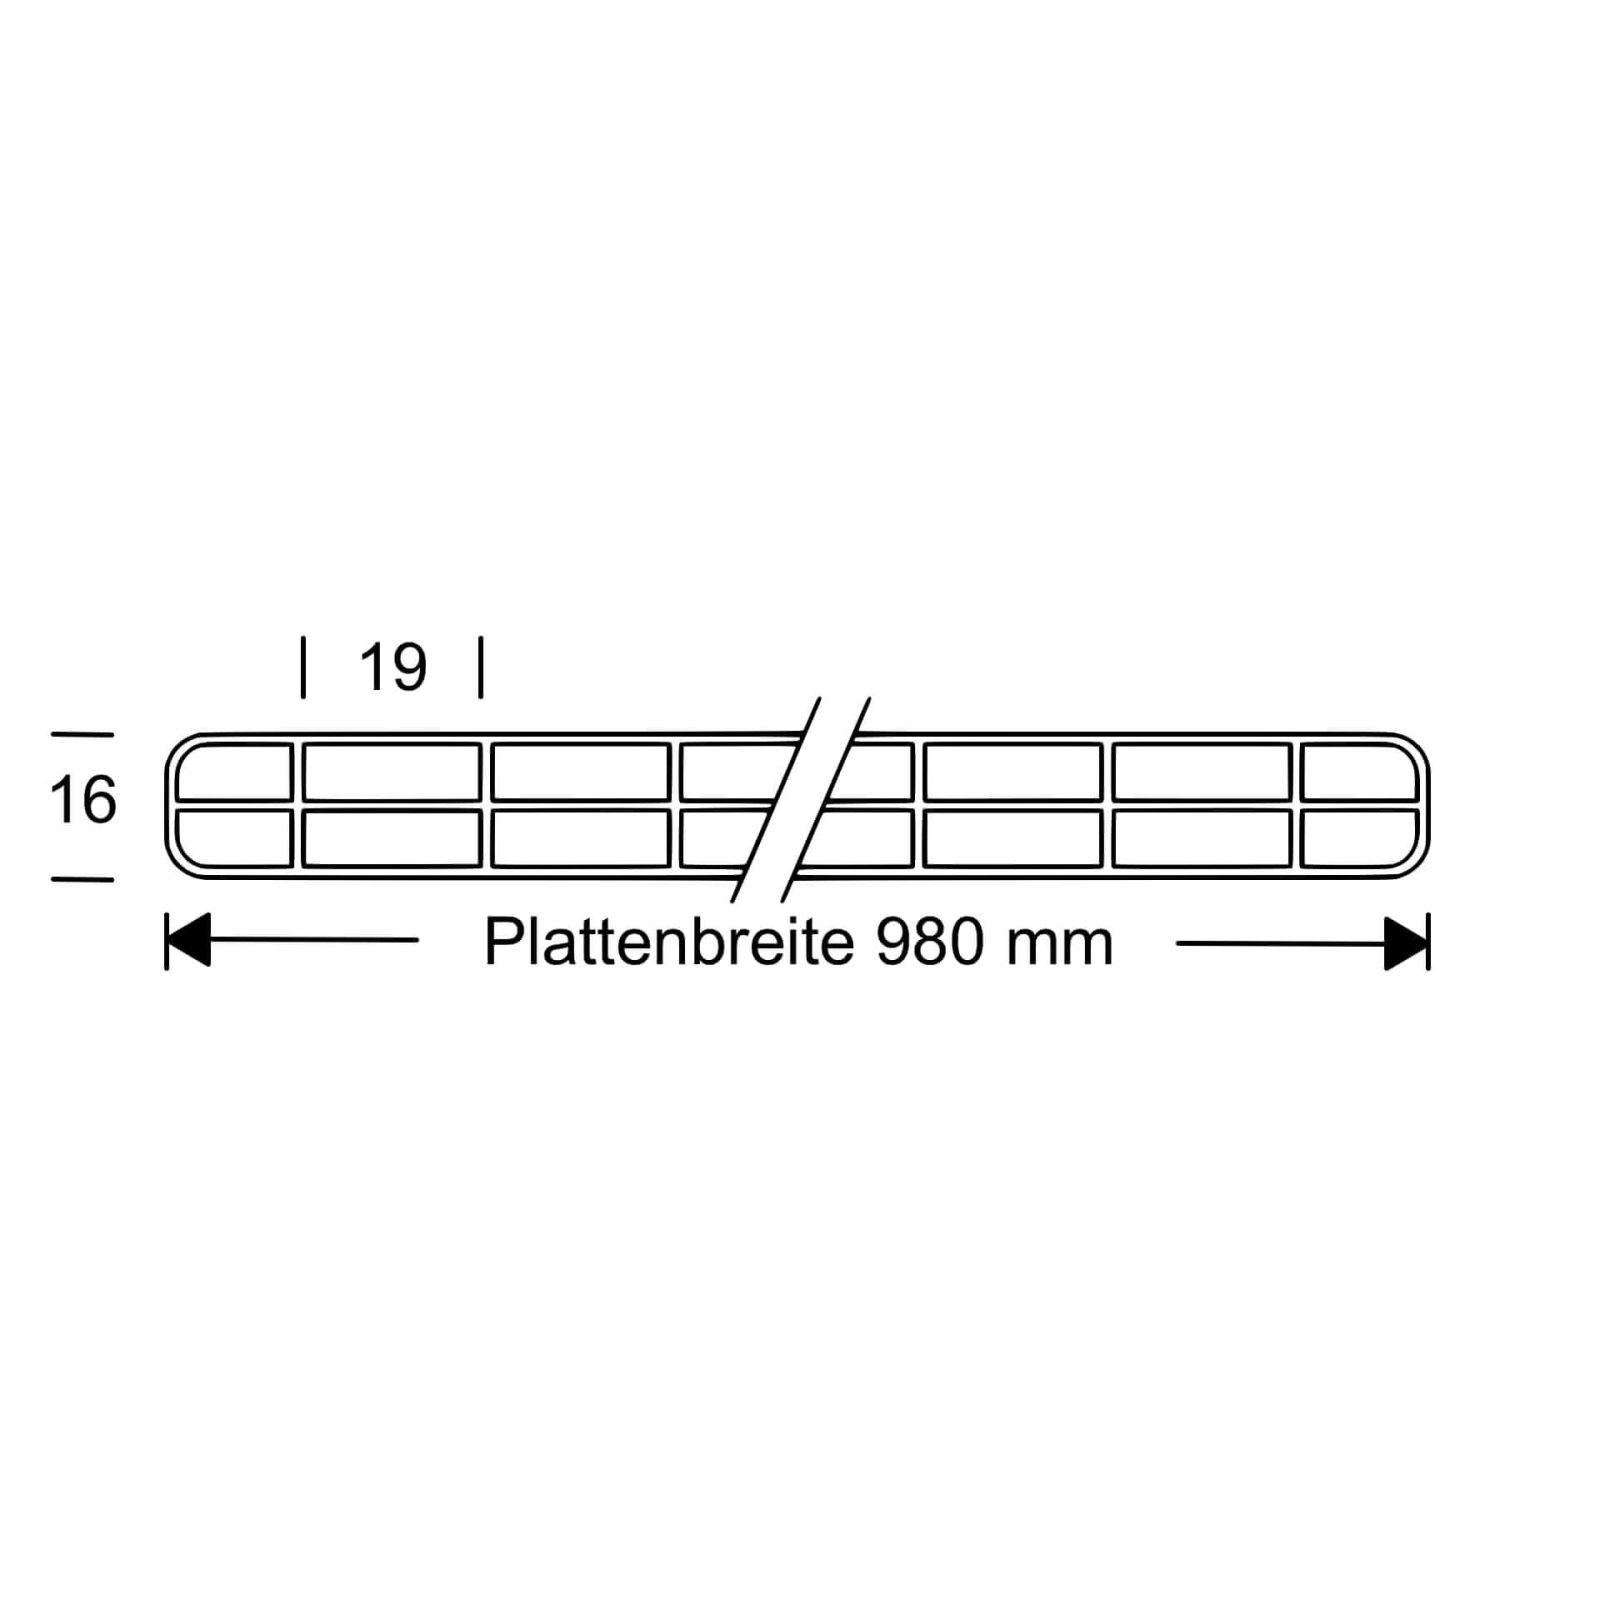 Polycarbonat Stegplatte | 16 mm | Profil Zevener Sprosse | Sparpaket | Plattenbreite 980 mm | Klar | Novalite | Breite 3,13 m | Länge 2,00 m #10